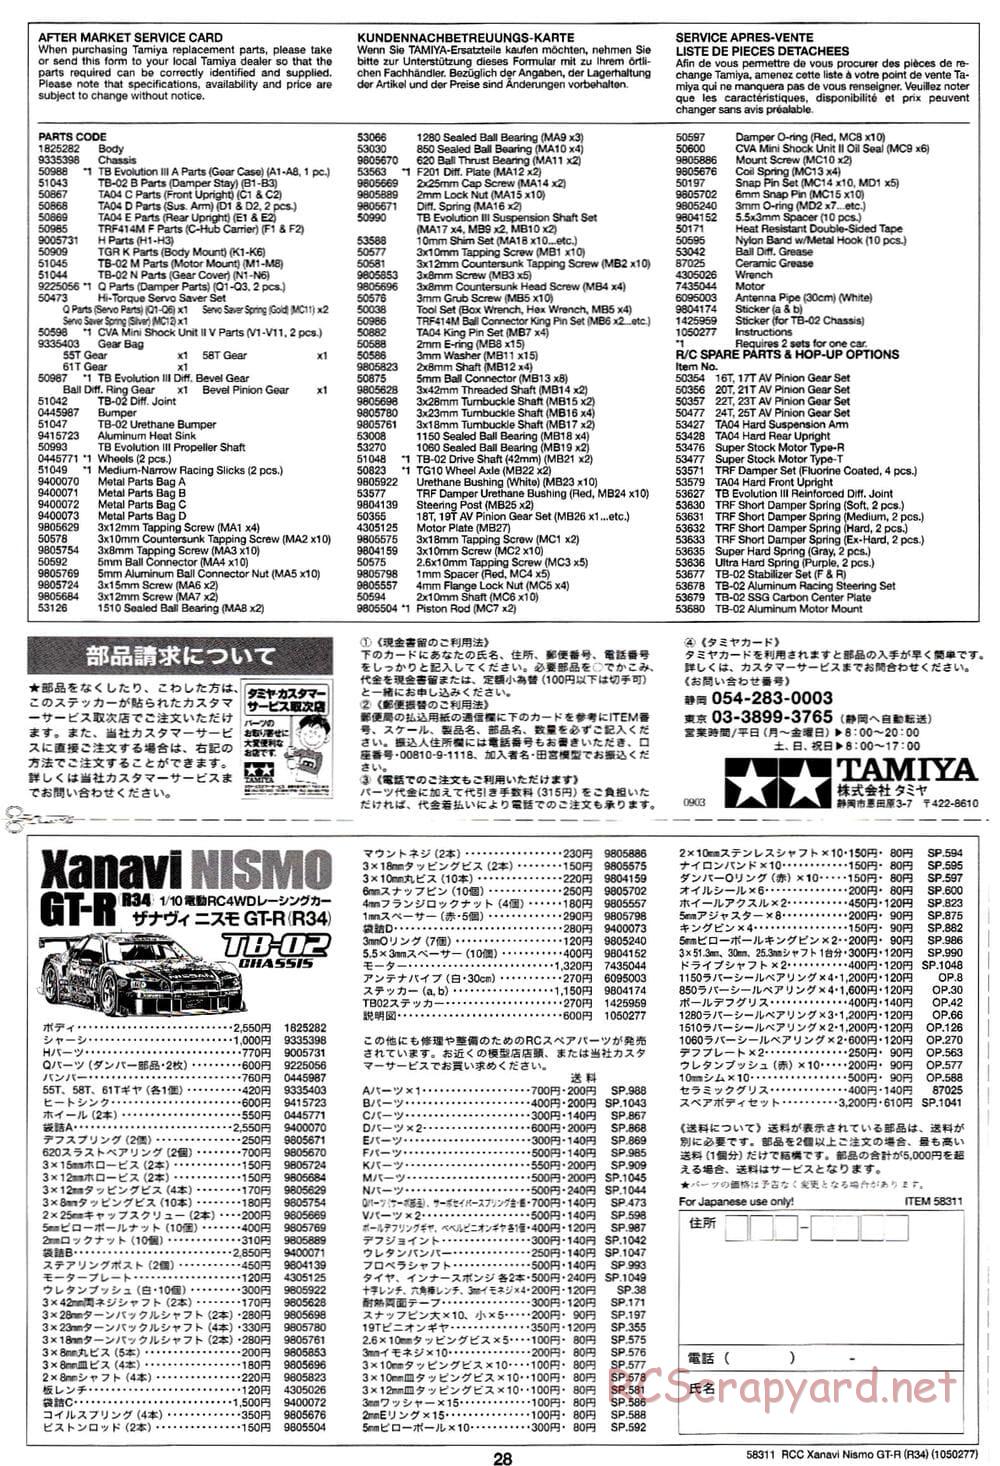 Tamiya - Xanavi Nismo GT-R (R34) - TB-02 Chassis - Manual - Page 28